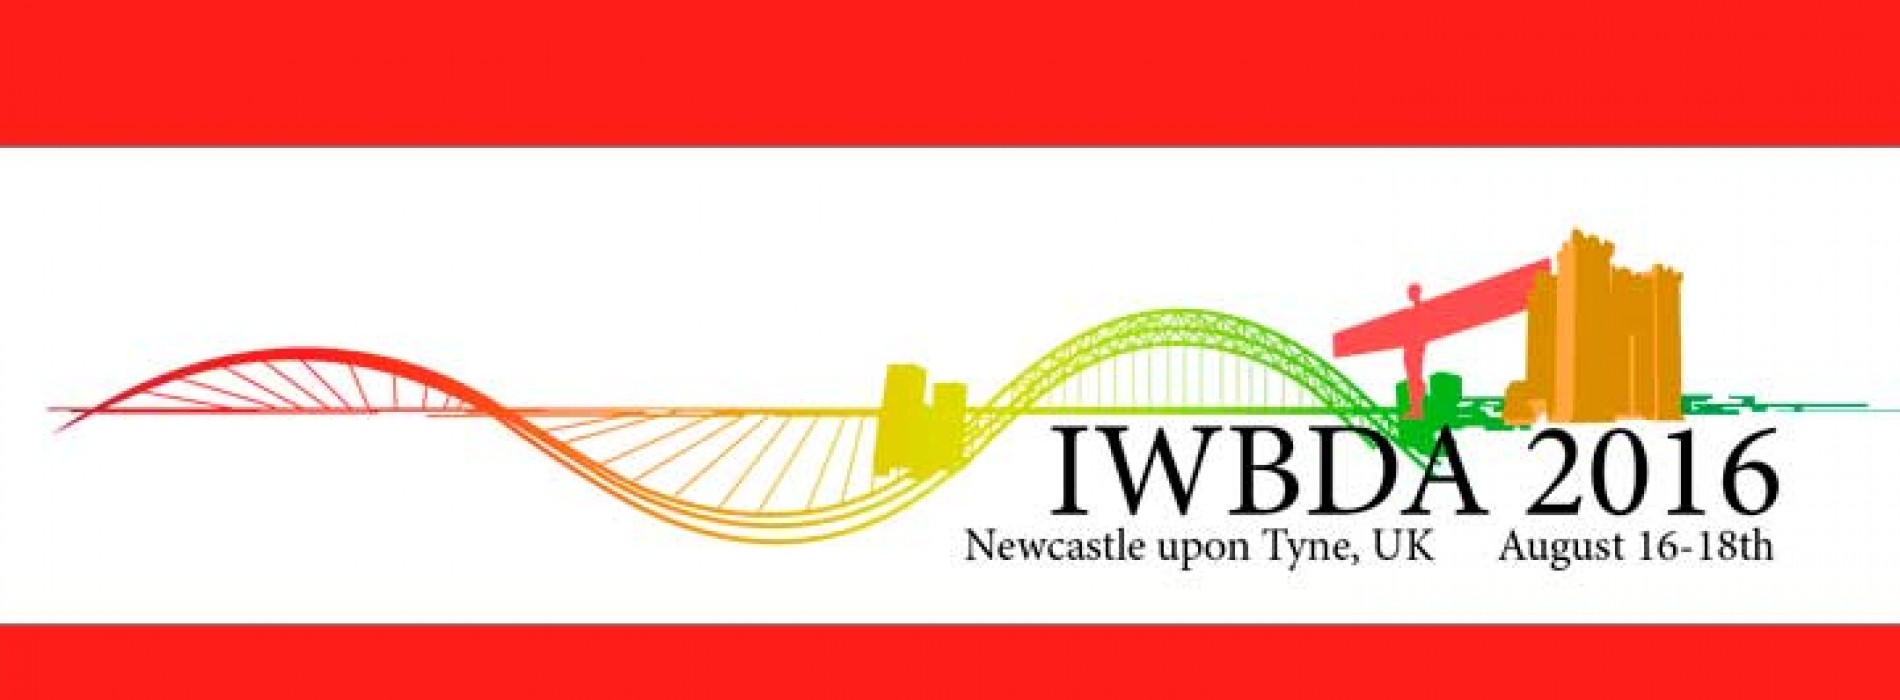 International Workshop on Bio-Design Automation: Aug 16-18 in Newcastle, UK